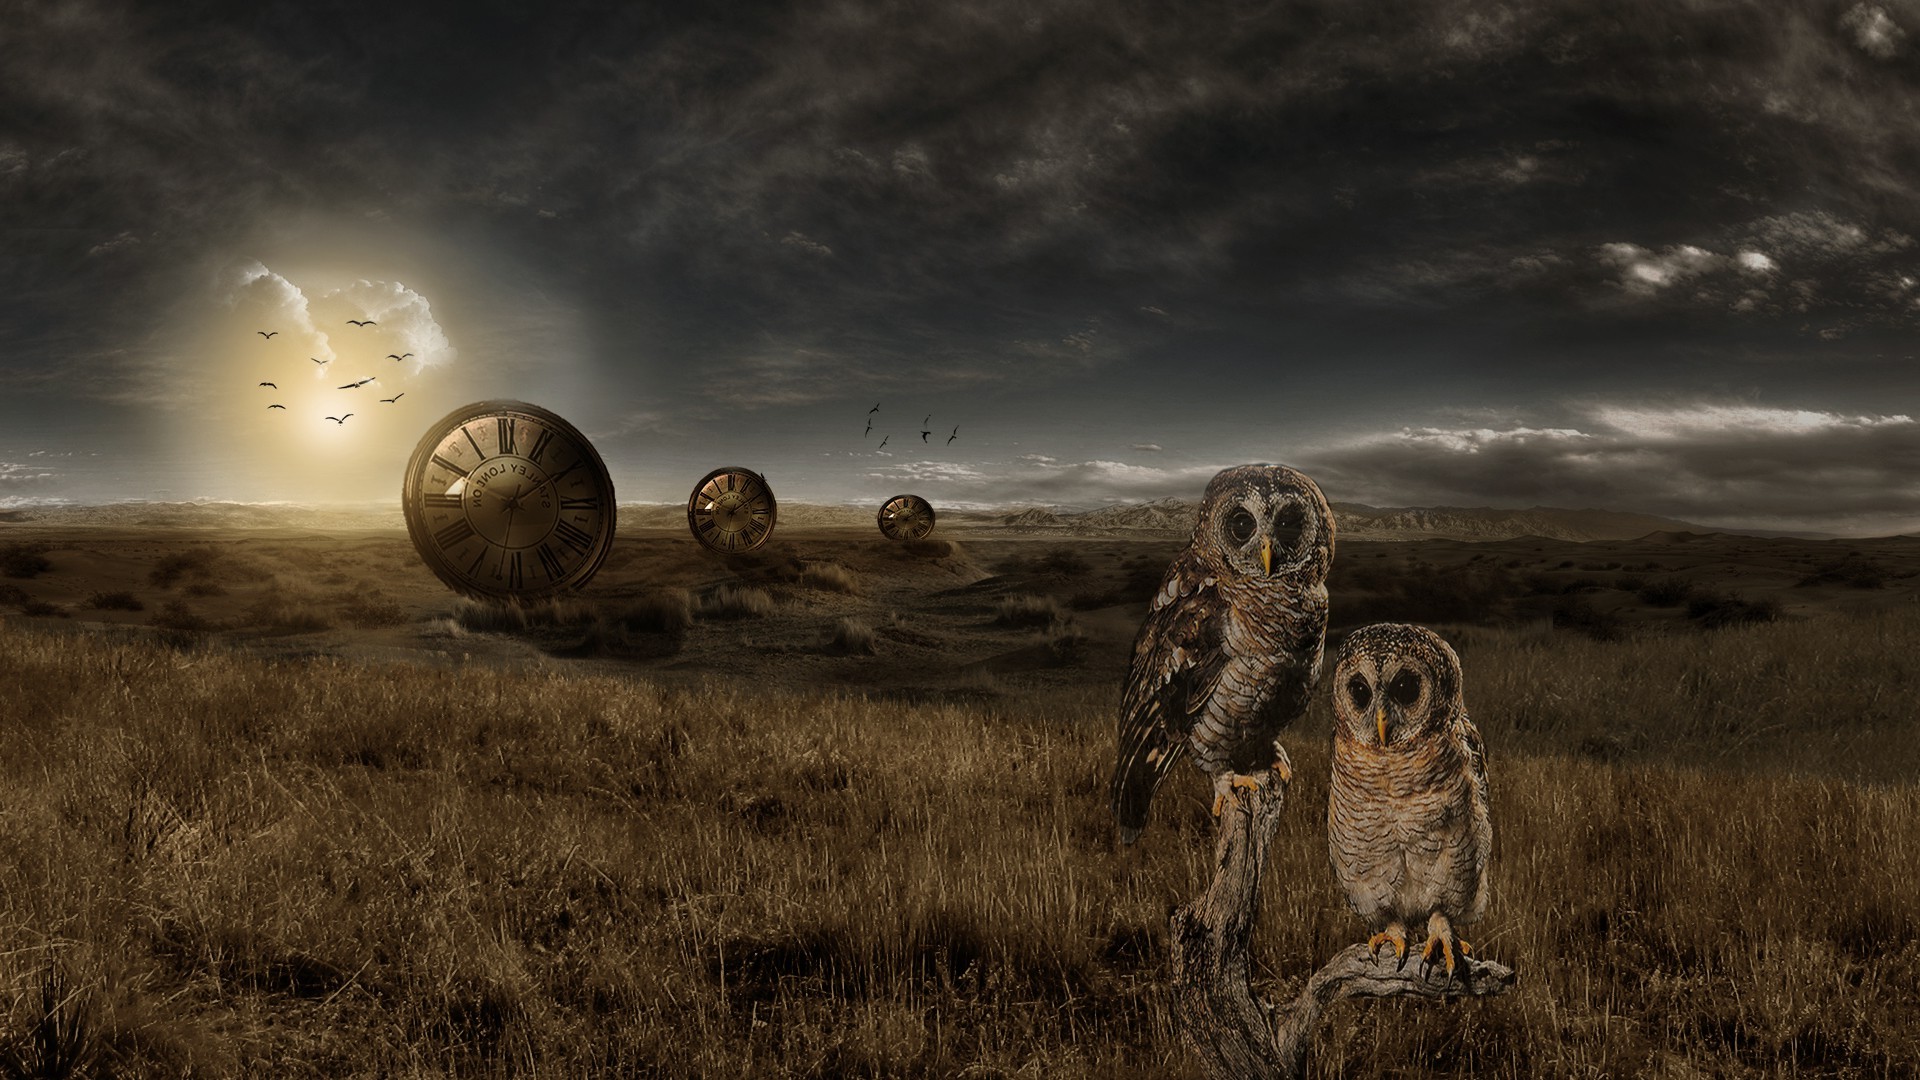 Adobe Photoshop, Landscape, Owl, Watch, Photo Manipulation Wallpaper